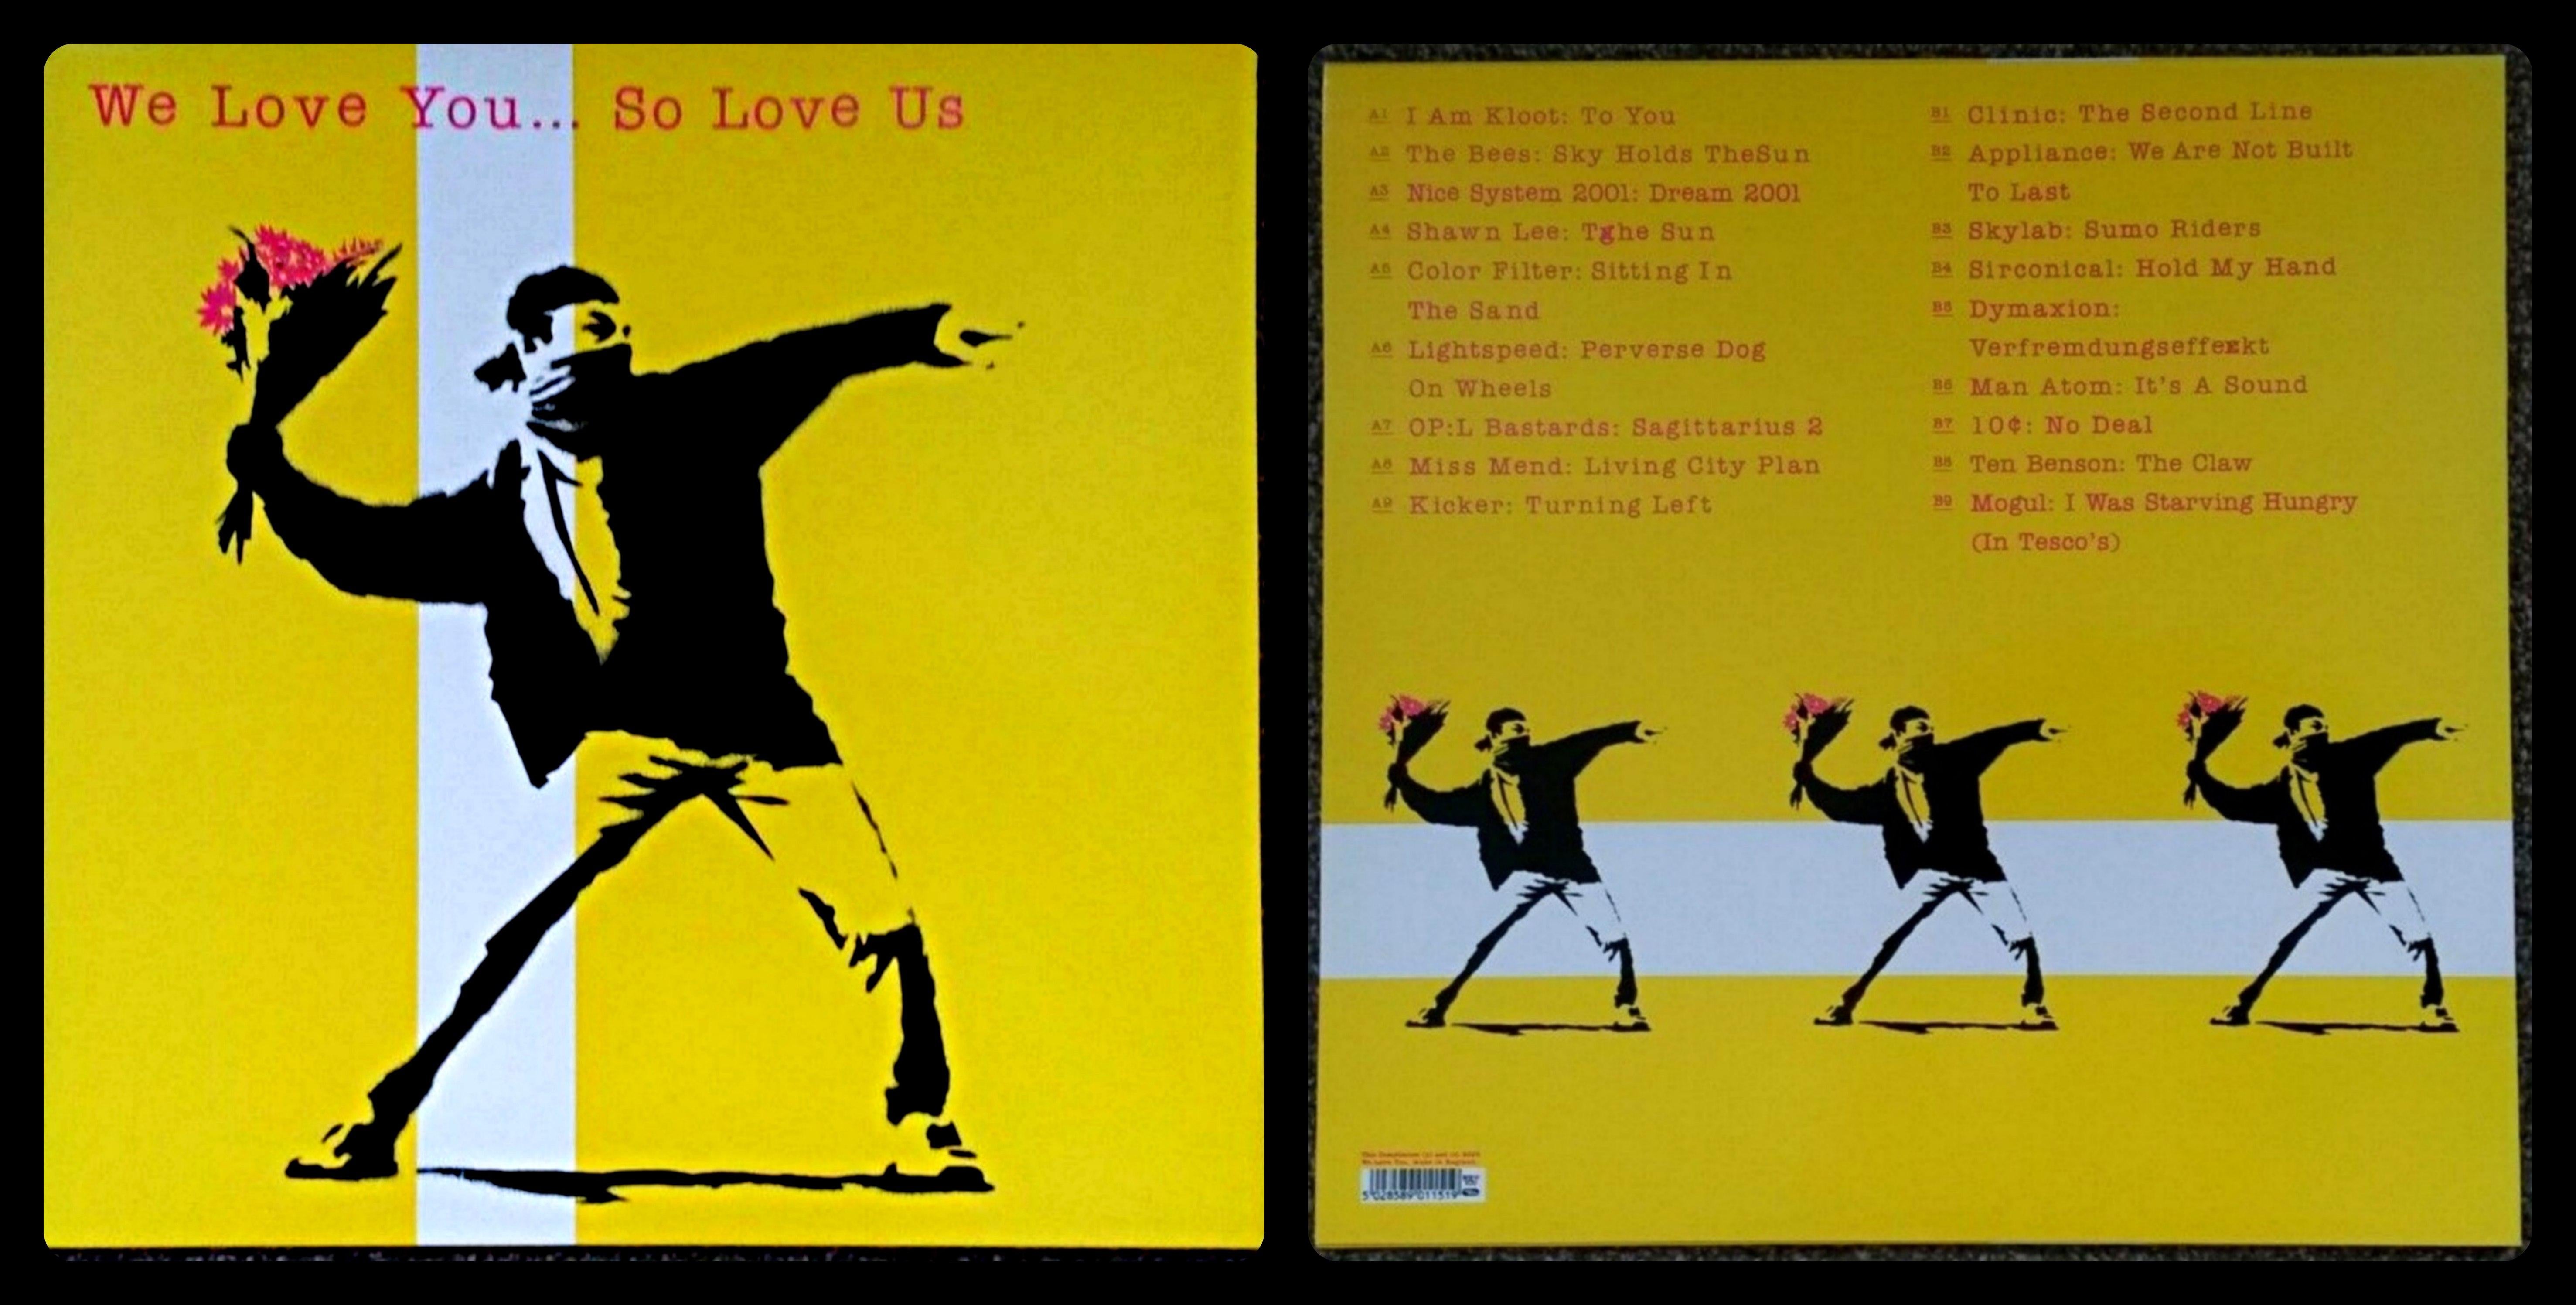 We Love You...So Love Us Mixed Media Flower Bomber Silkscreen Album Cover & LP  - Street Art Print by Banksy